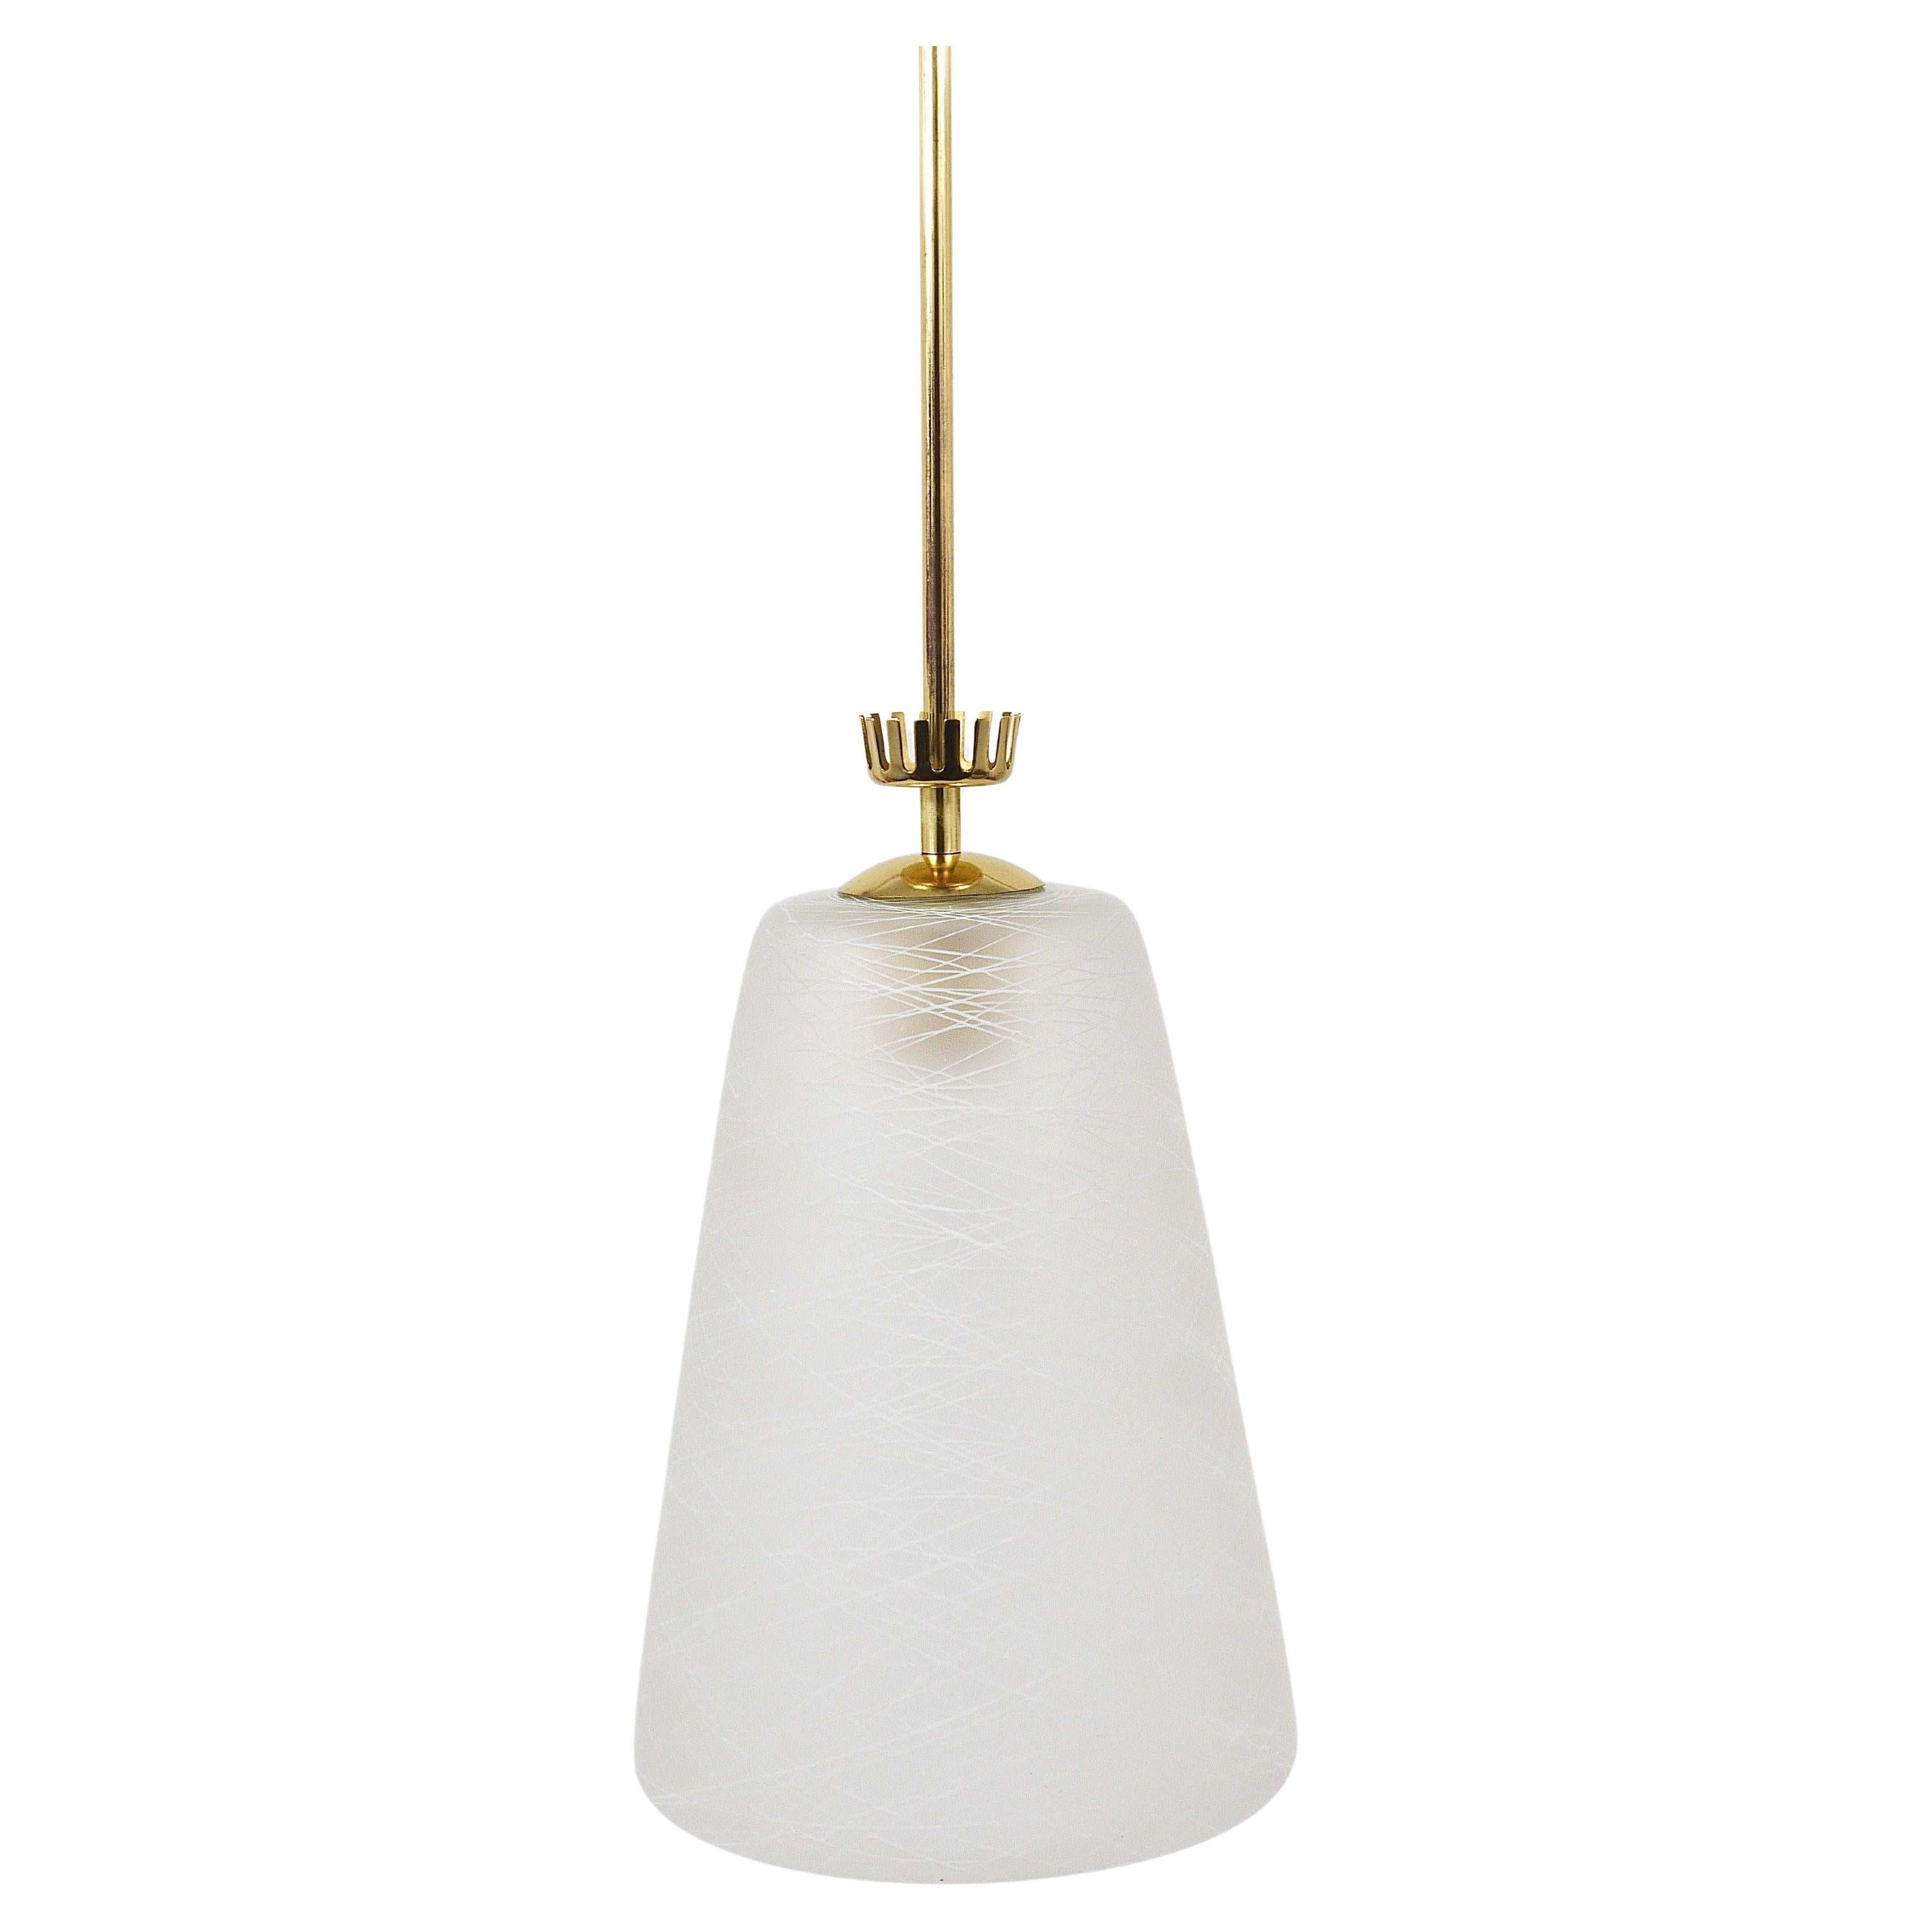 Gio Ponti Style Mid-Century Brass Crown Pendant Lamp Lantern, Italy, 1950s